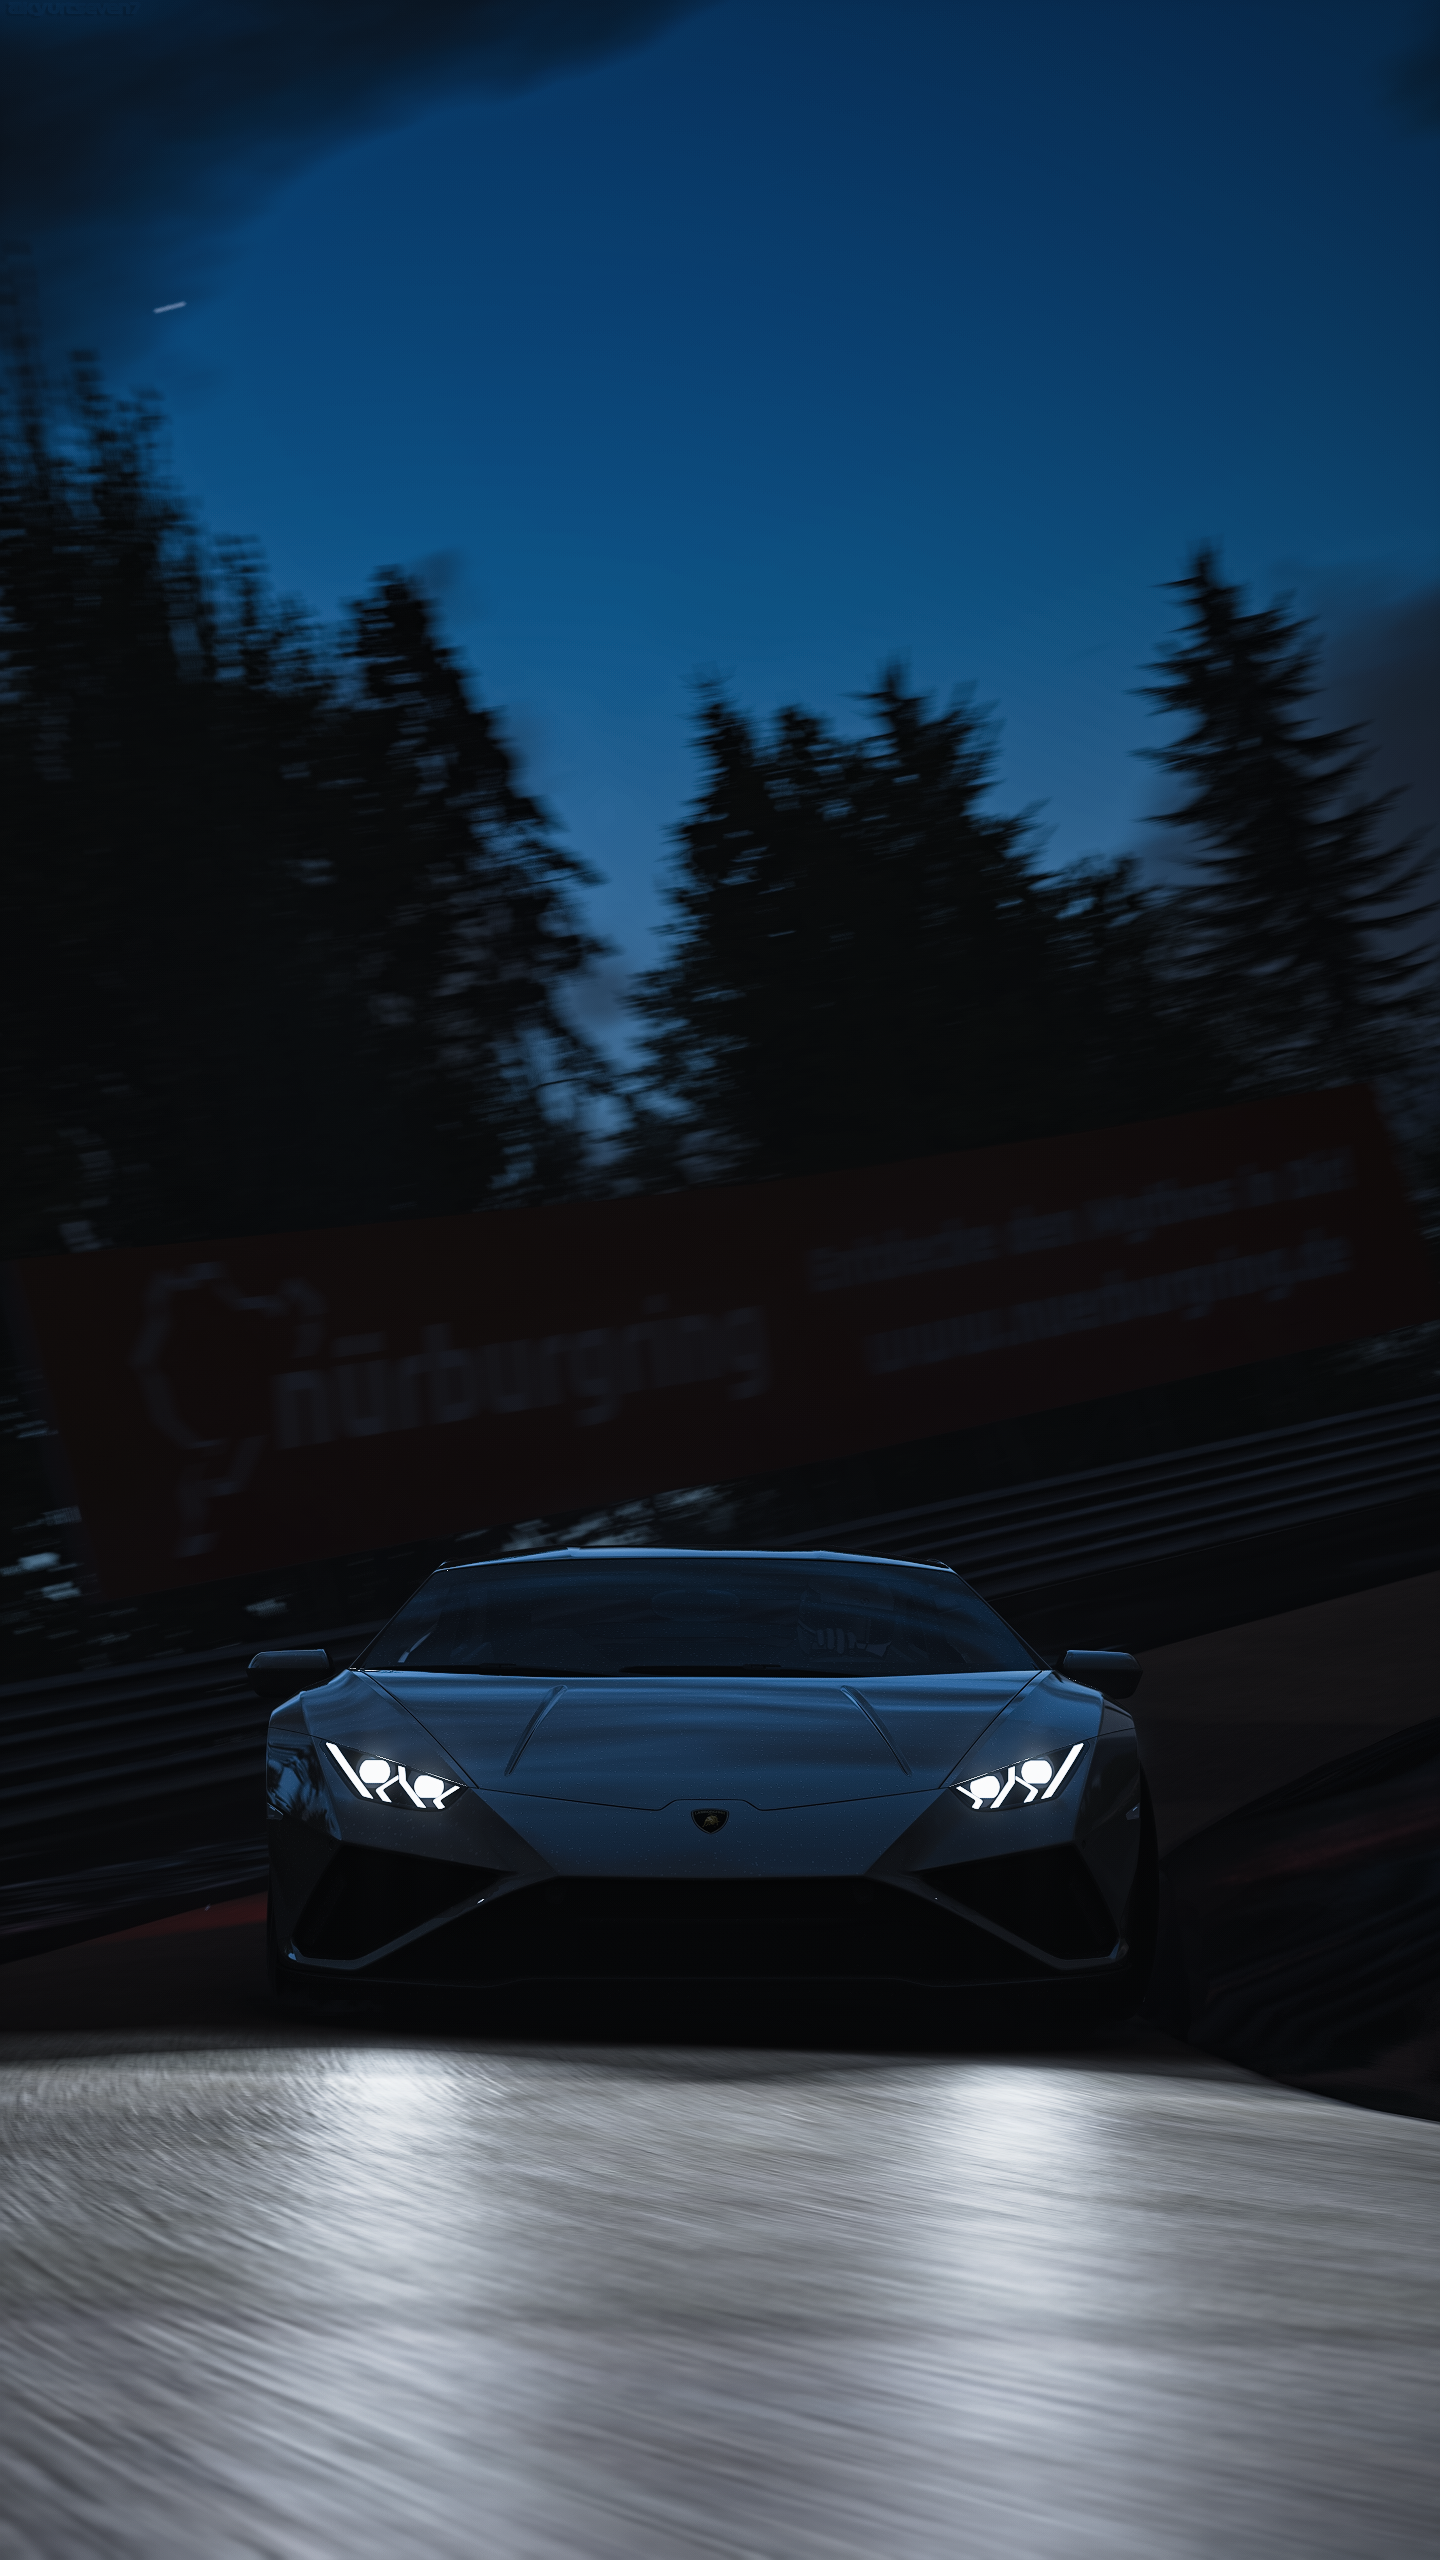 General 1440x2560 Lamborghini Lamborghini Huracan Nurburgring Assetto Corsa car vehicle night video games